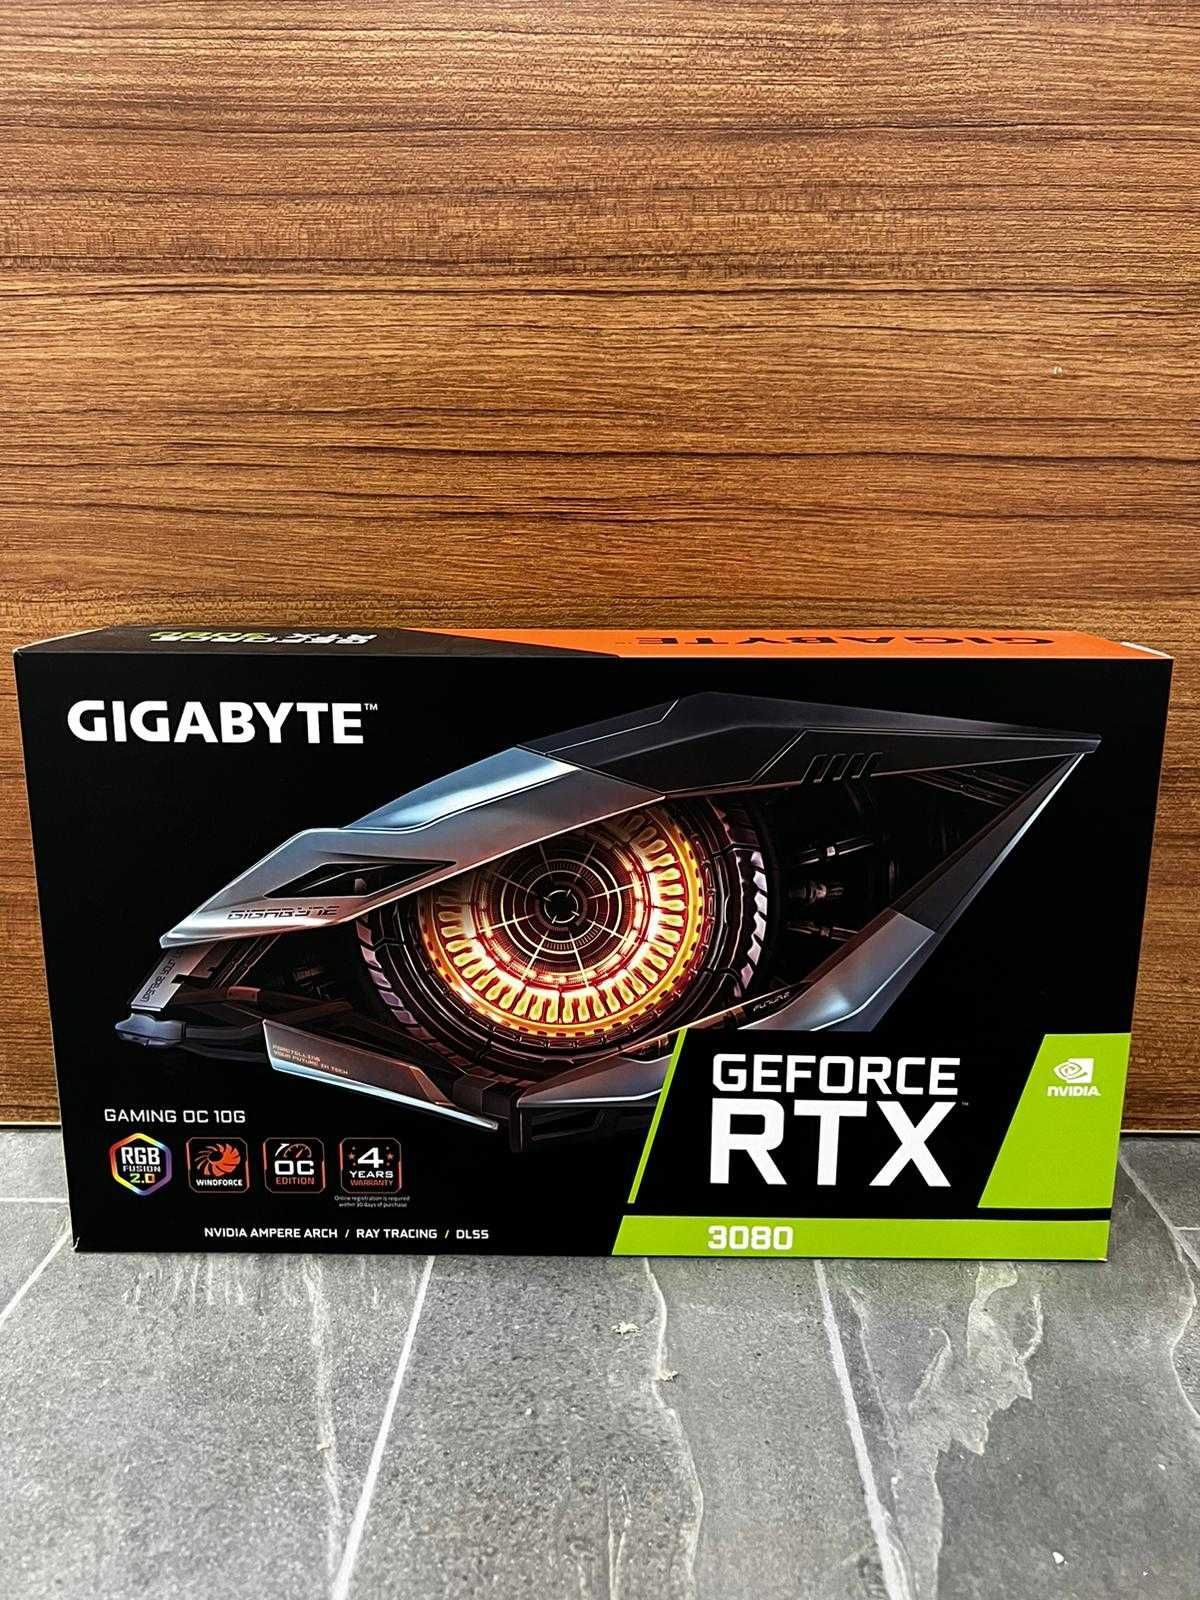 NVIDIA Gigabyte GeForce RTX 3080 Gaming OC LHR 10GB GDDR6X 320 bit